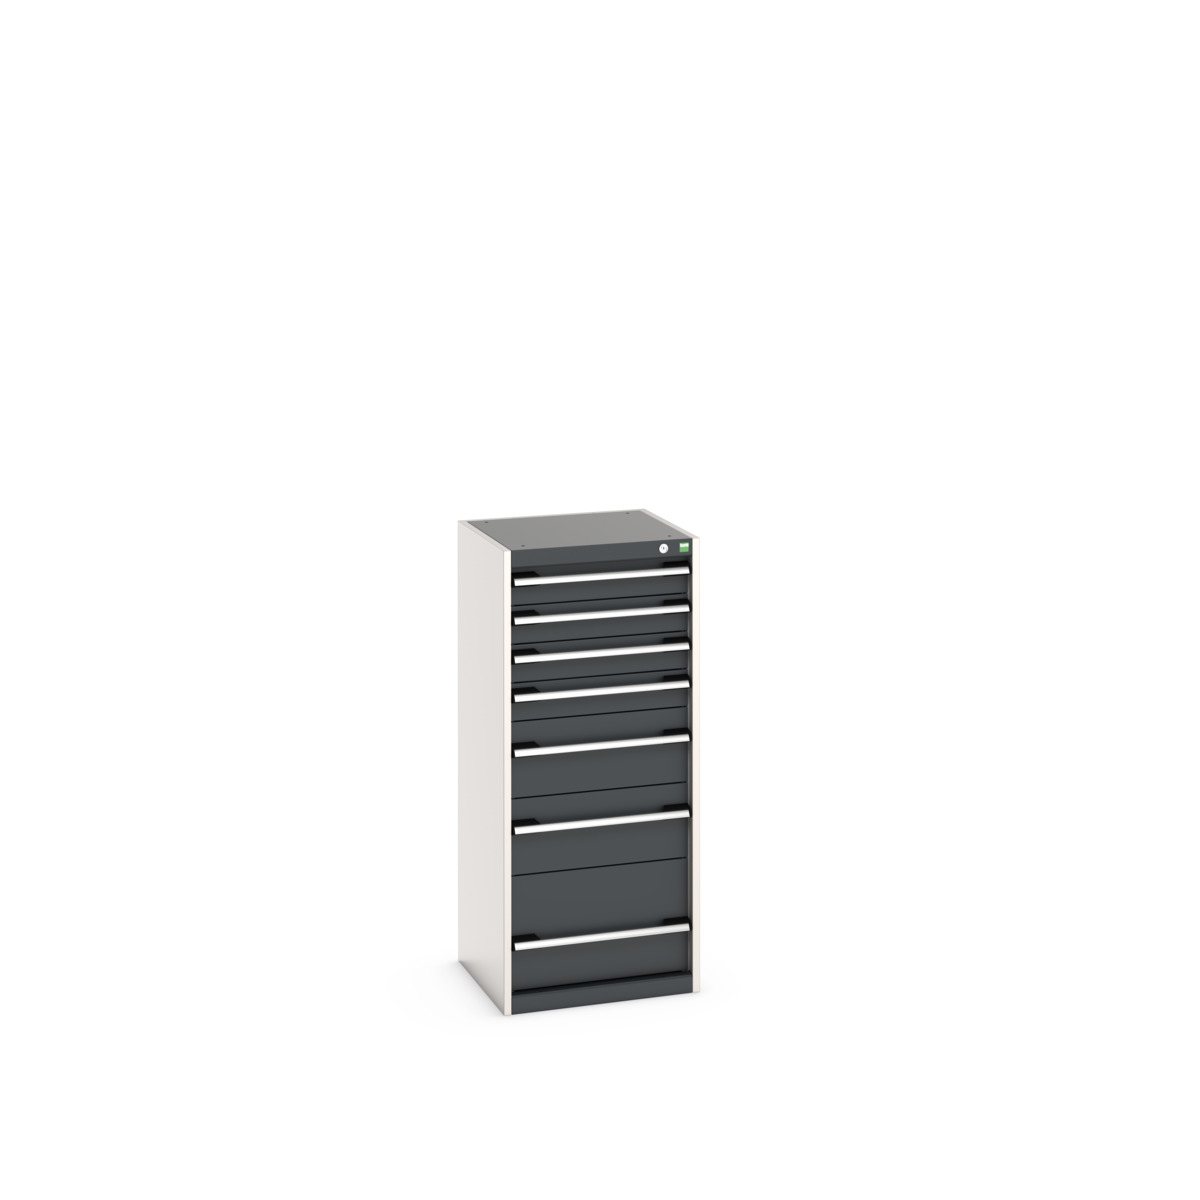 40010119. - cubio drawer cabinet